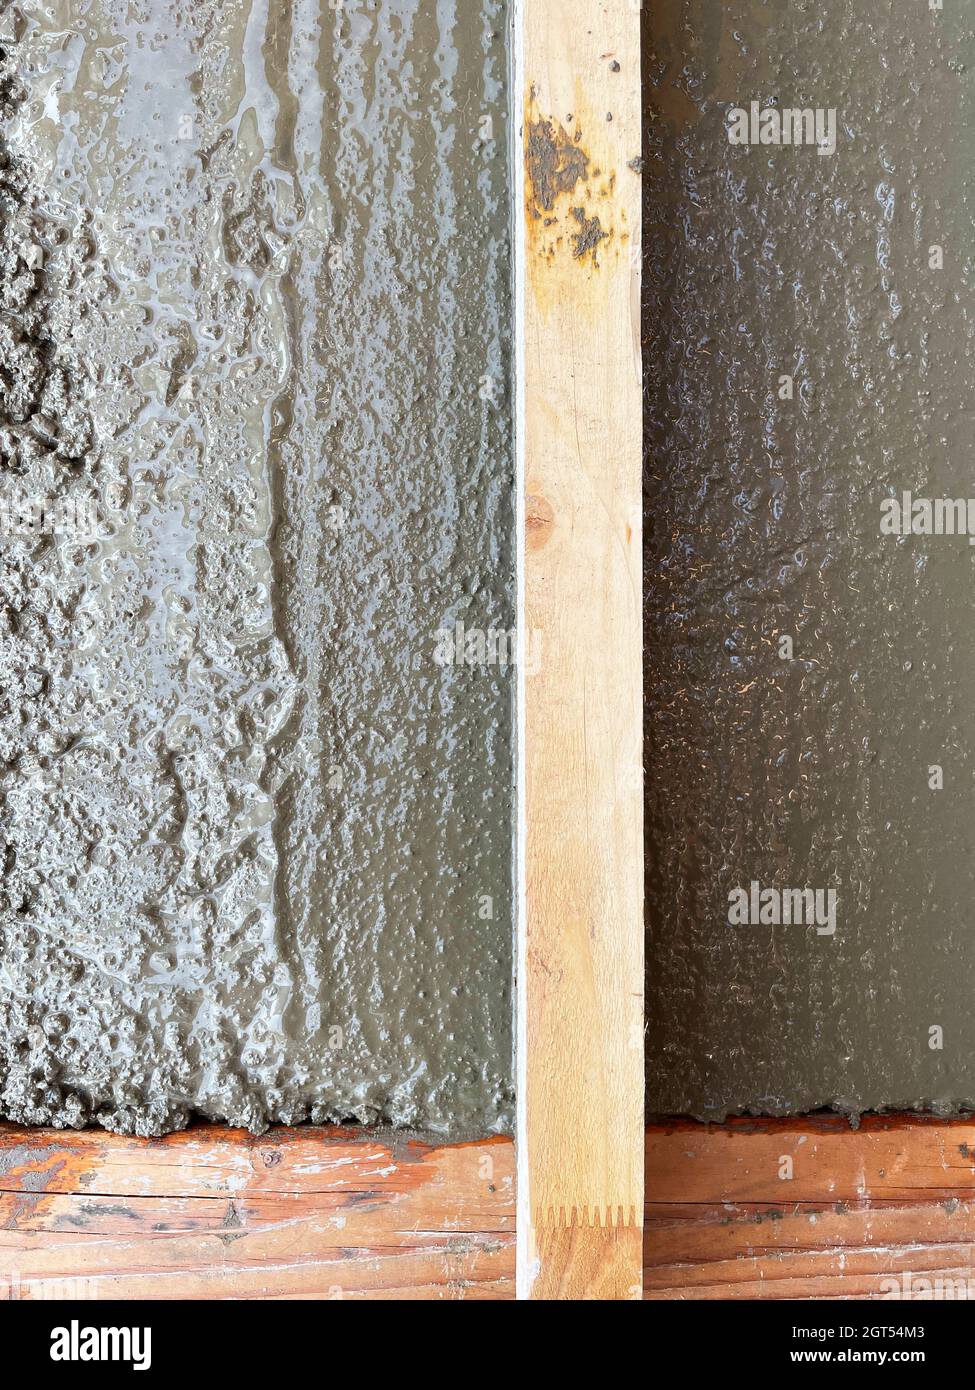 Fresh wet cement mortar mix background pattern. Stock Photo